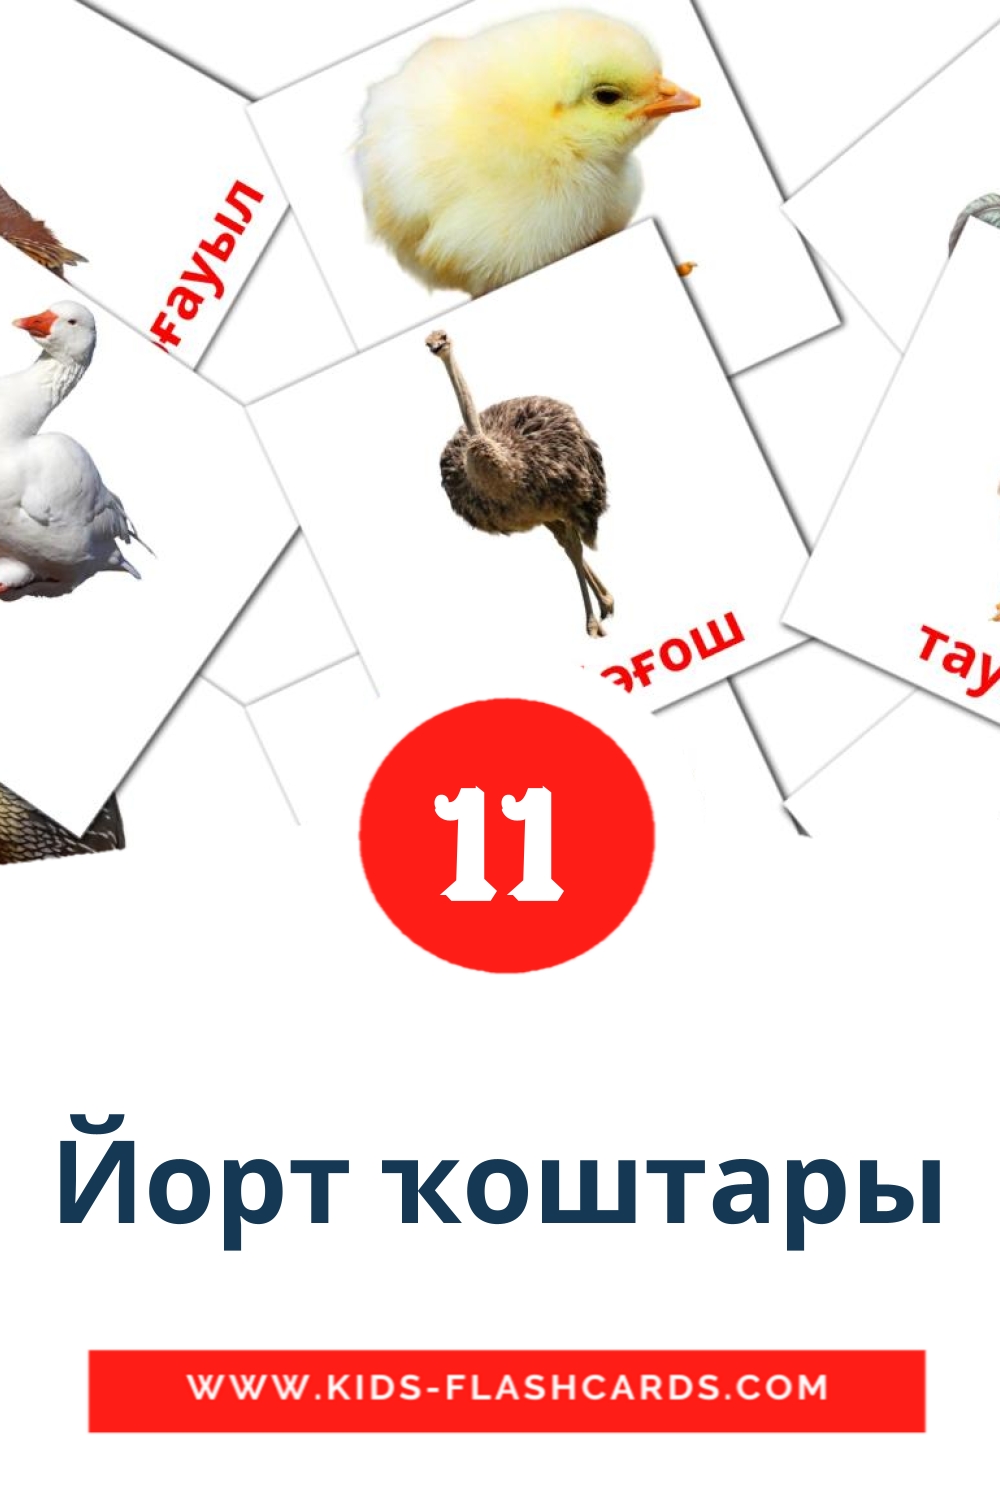 11 carte illustrate di Йорт ҡоштары per la scuola materna in bashkir